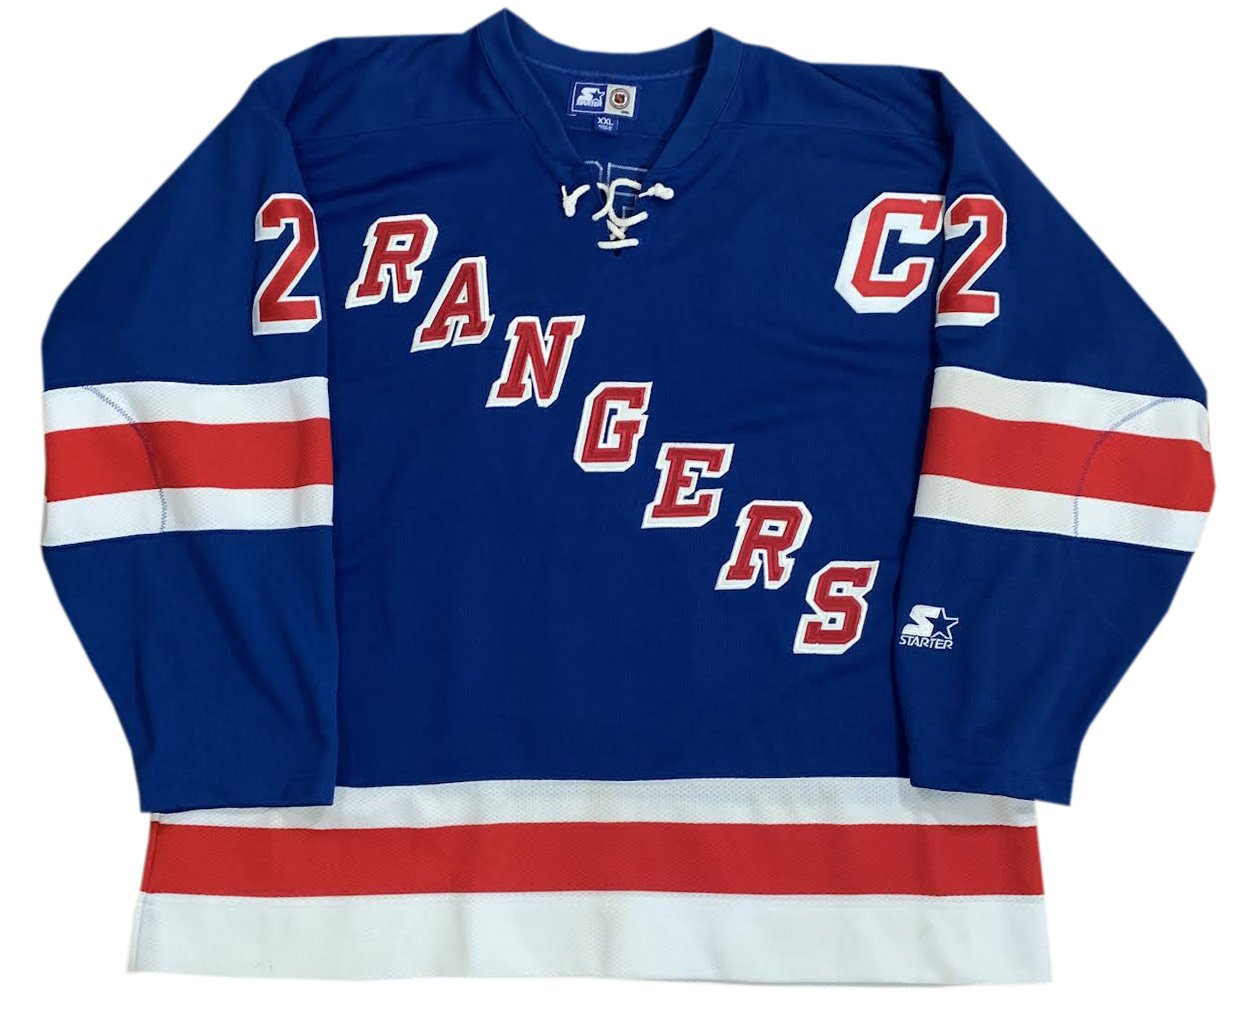 Vintage New York Rangers Nike Street Hockey Jersey, Size XL